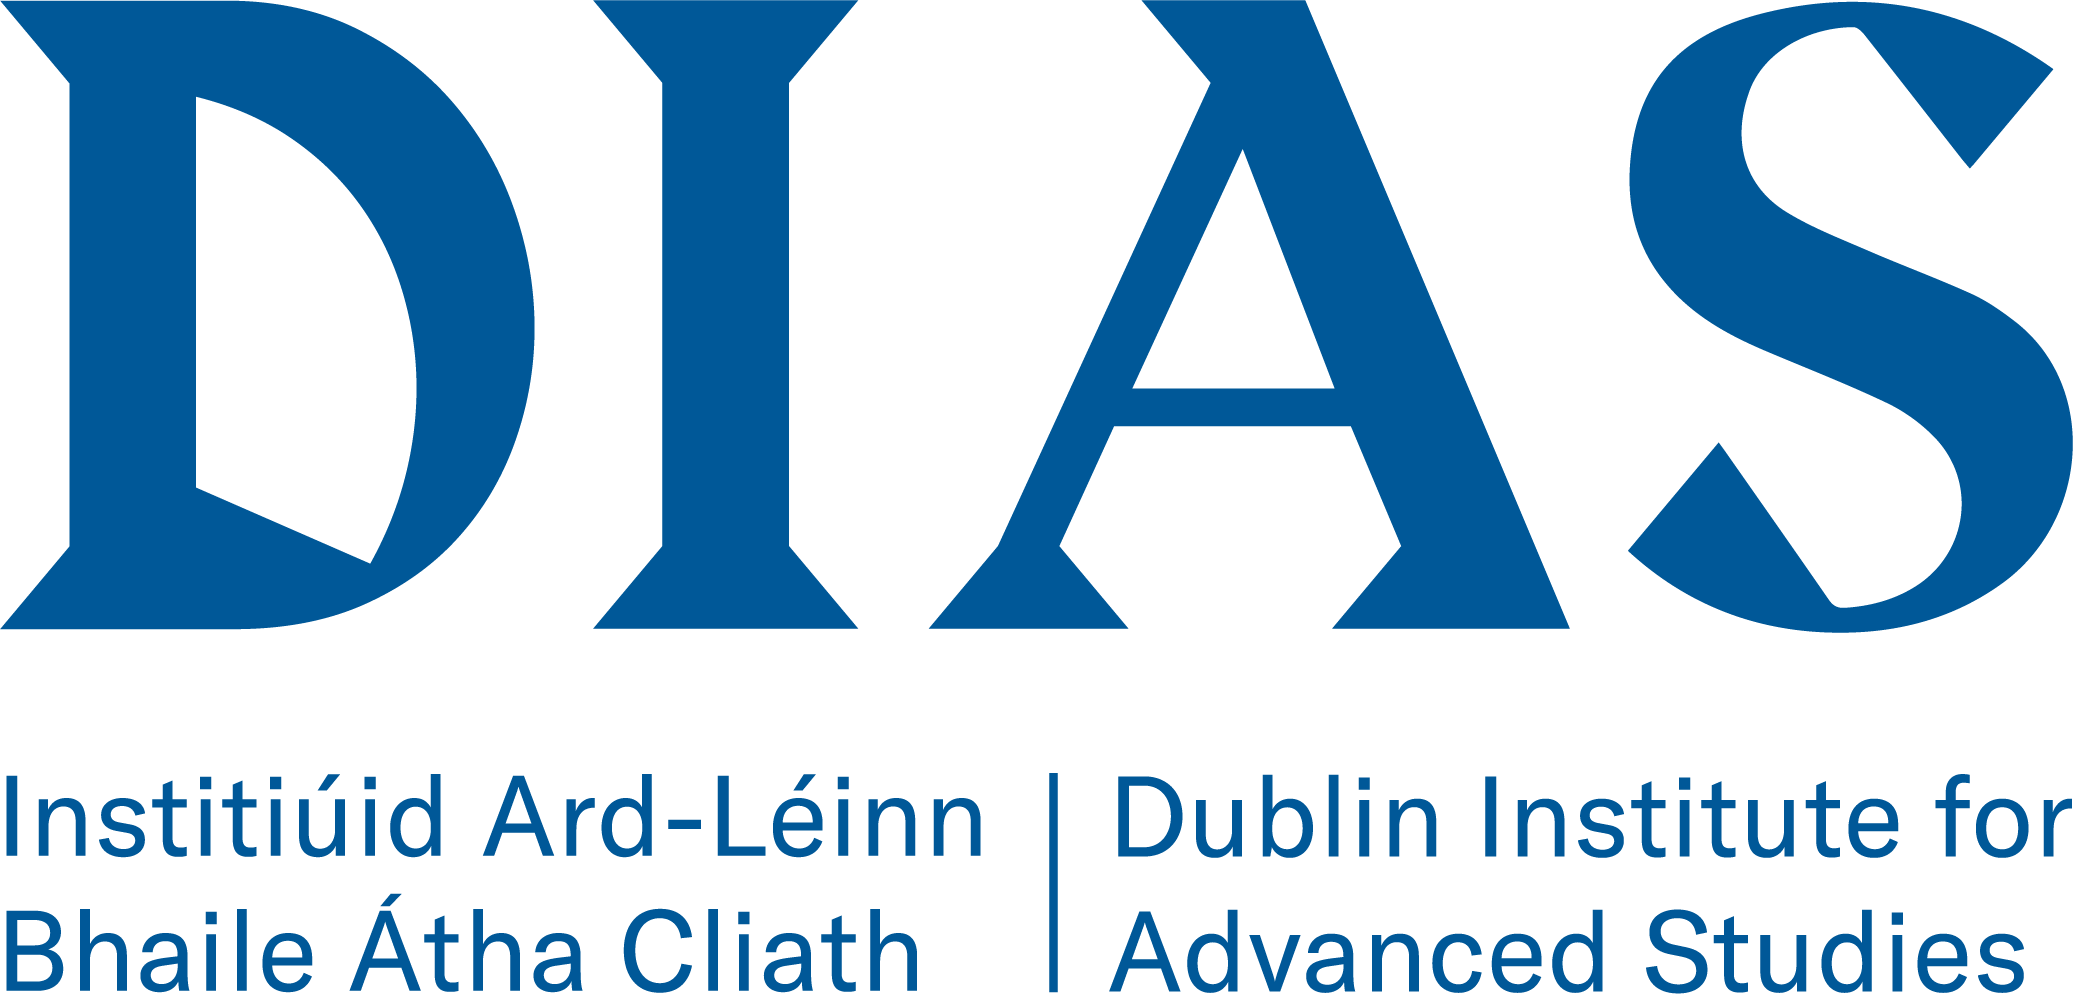 Dublin Institute for Advanced Studies Ireland